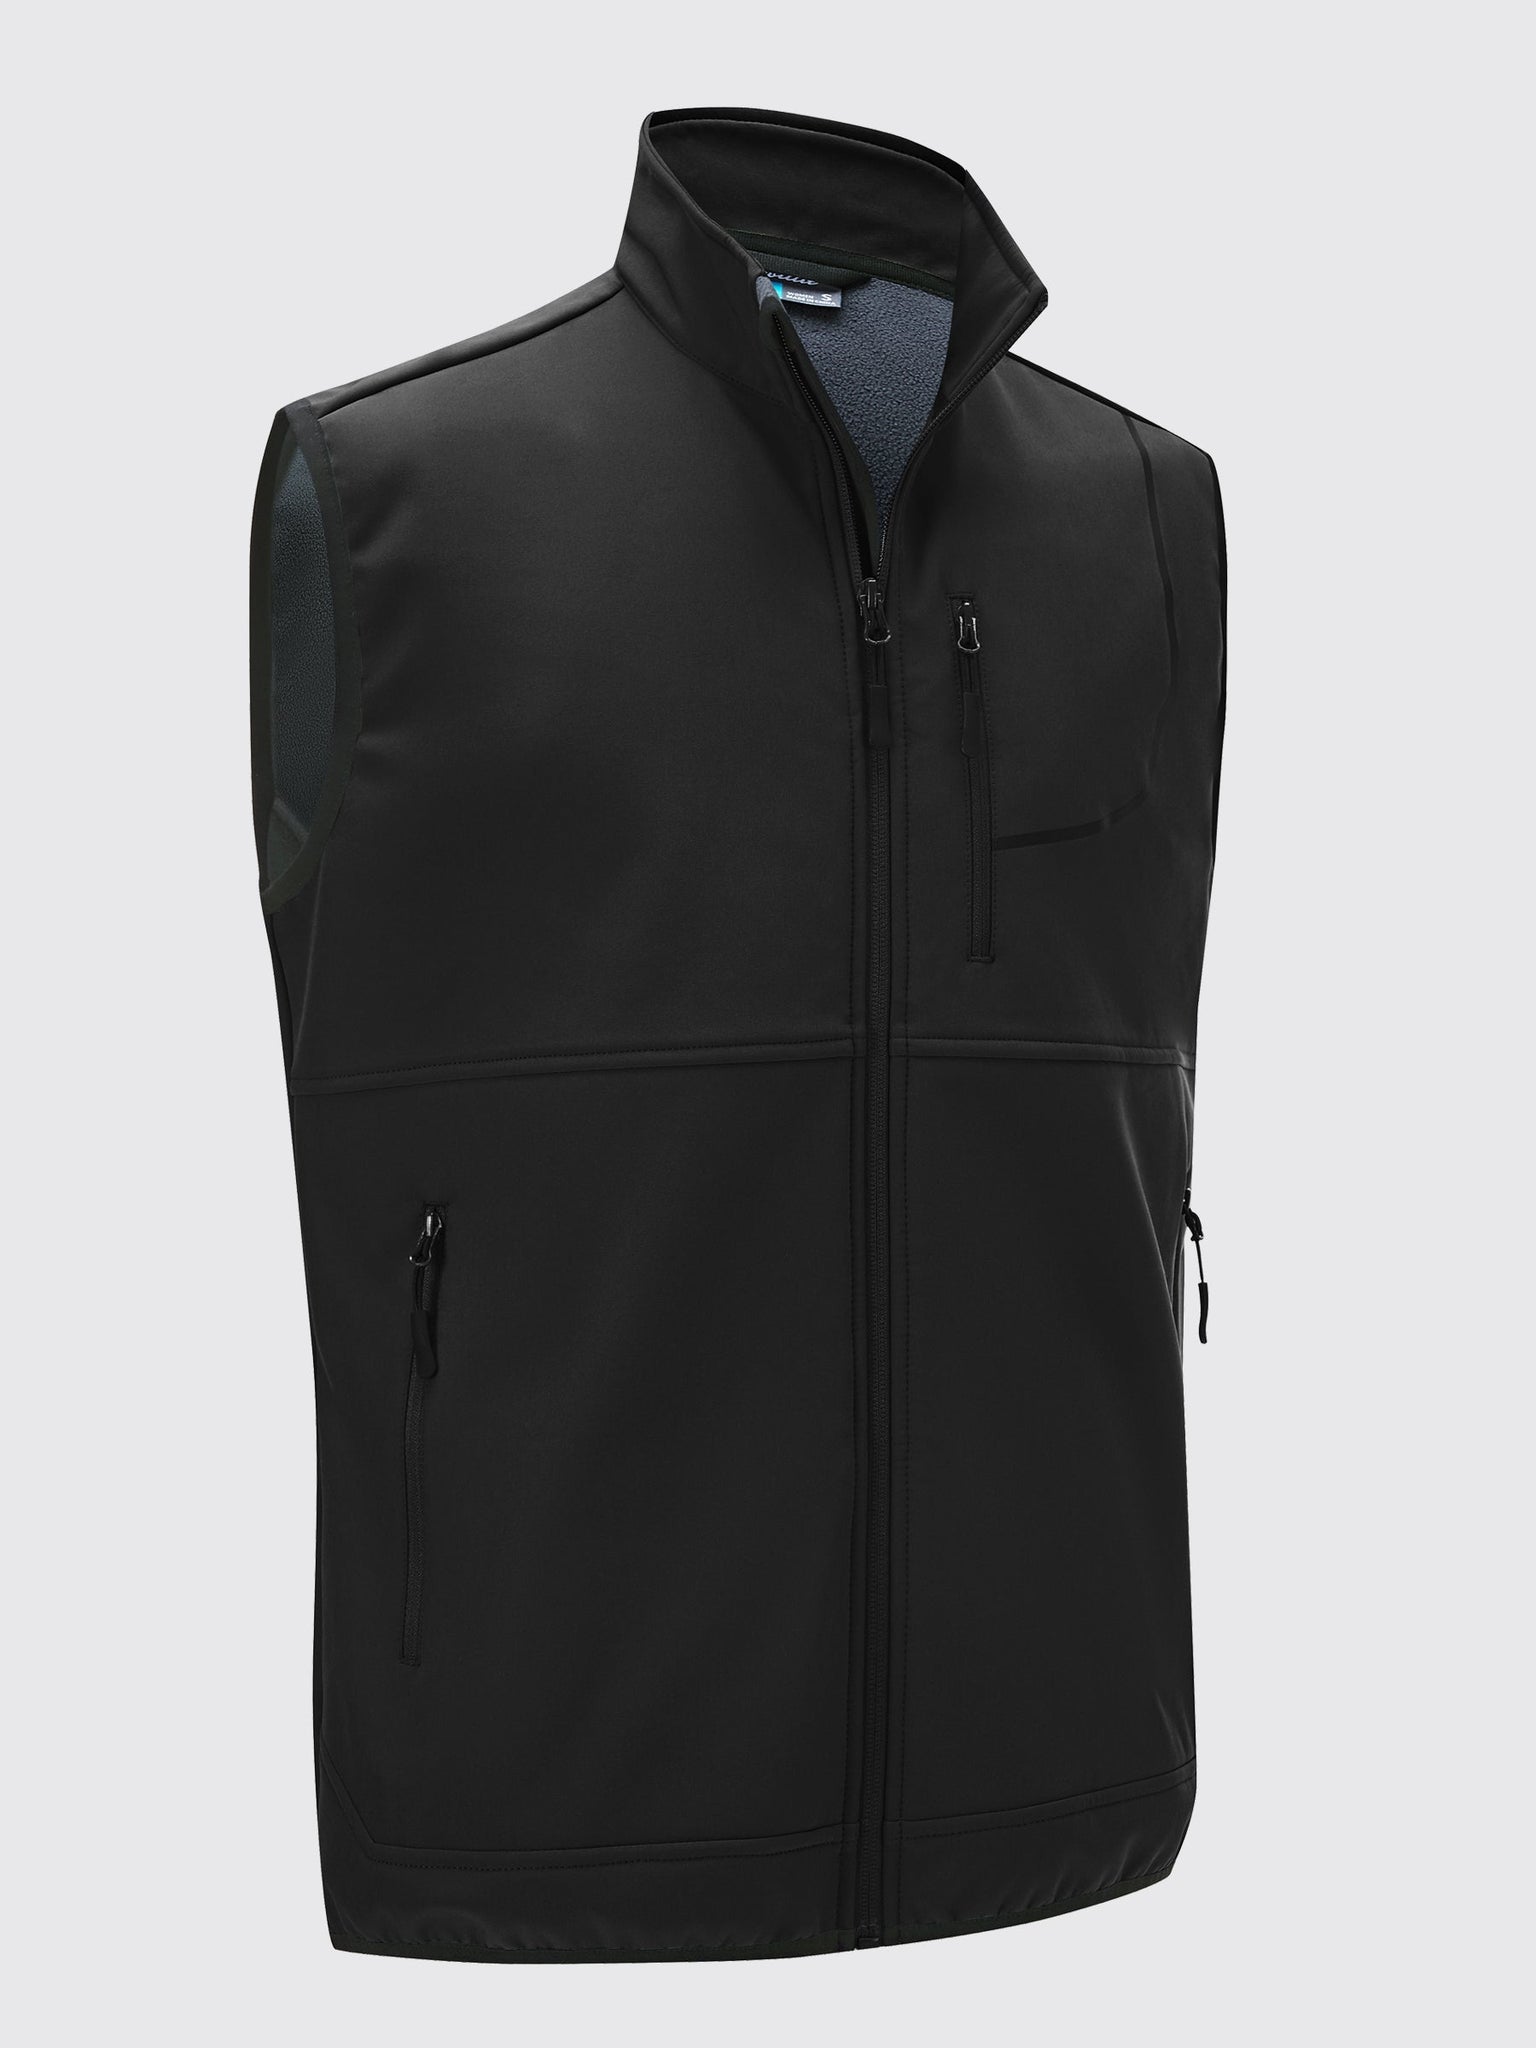 vWillit Men's Softshell Vest Fleece Lined Outerwear_Black3